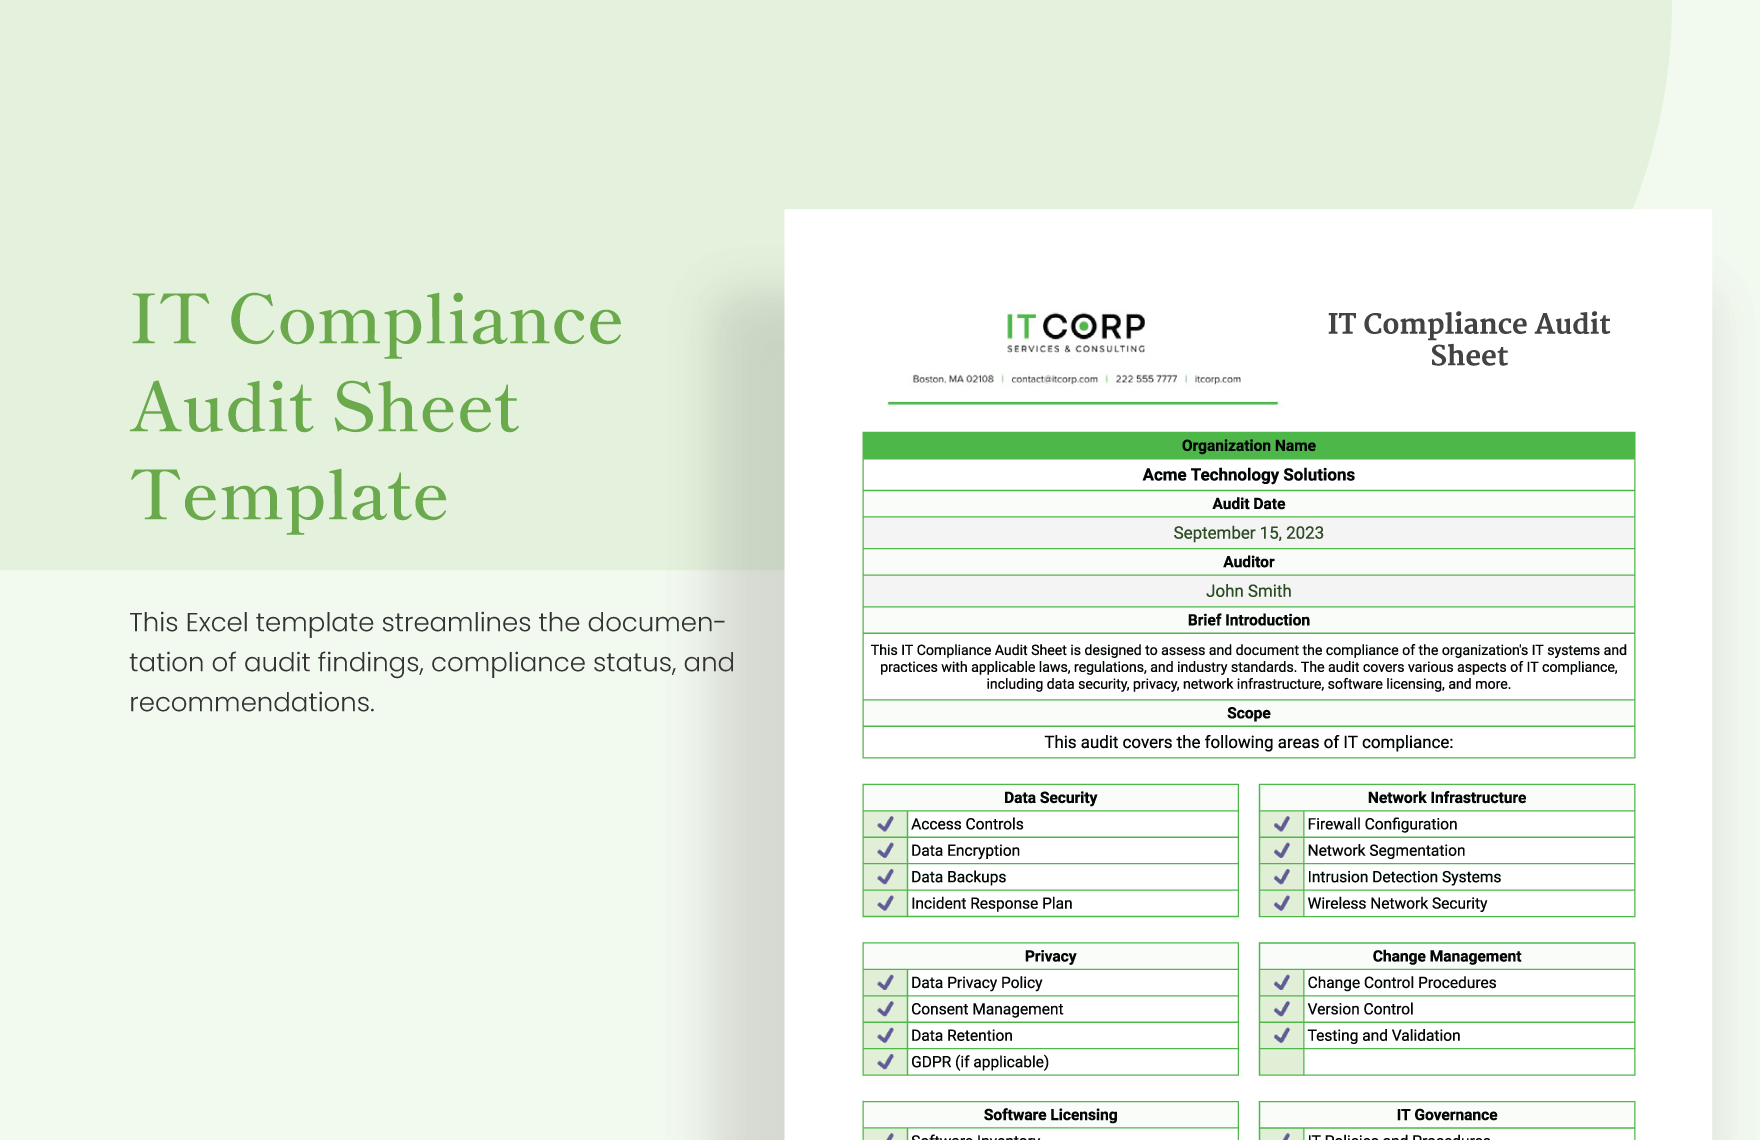 IT Compliance Audit Sheet Template